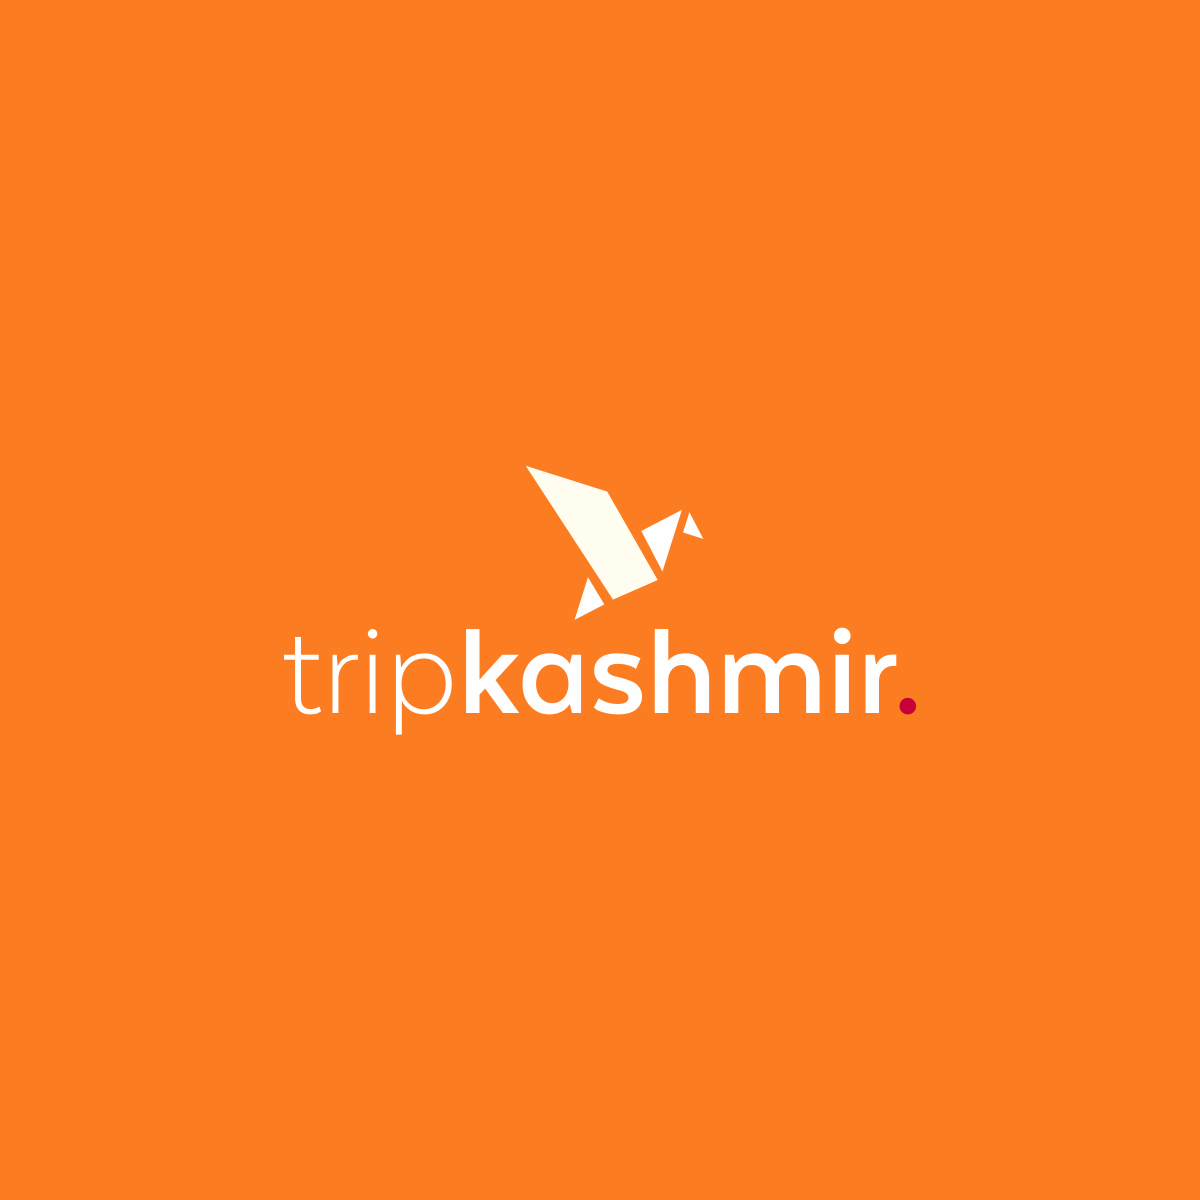 Trip Kashmir